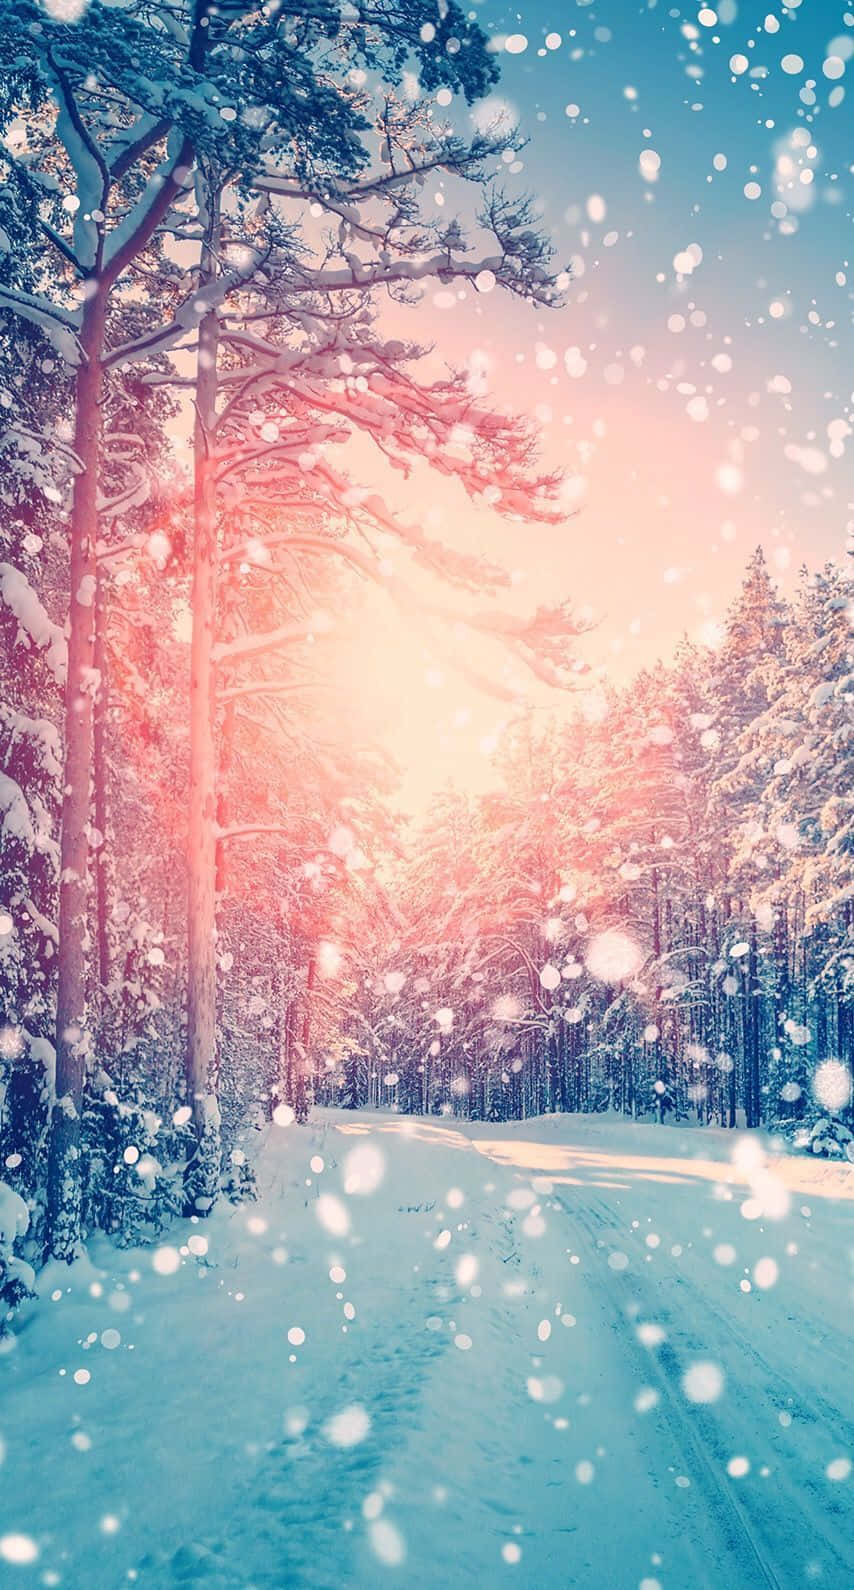 Cozy Winter Wonderland on Your Phone Screen